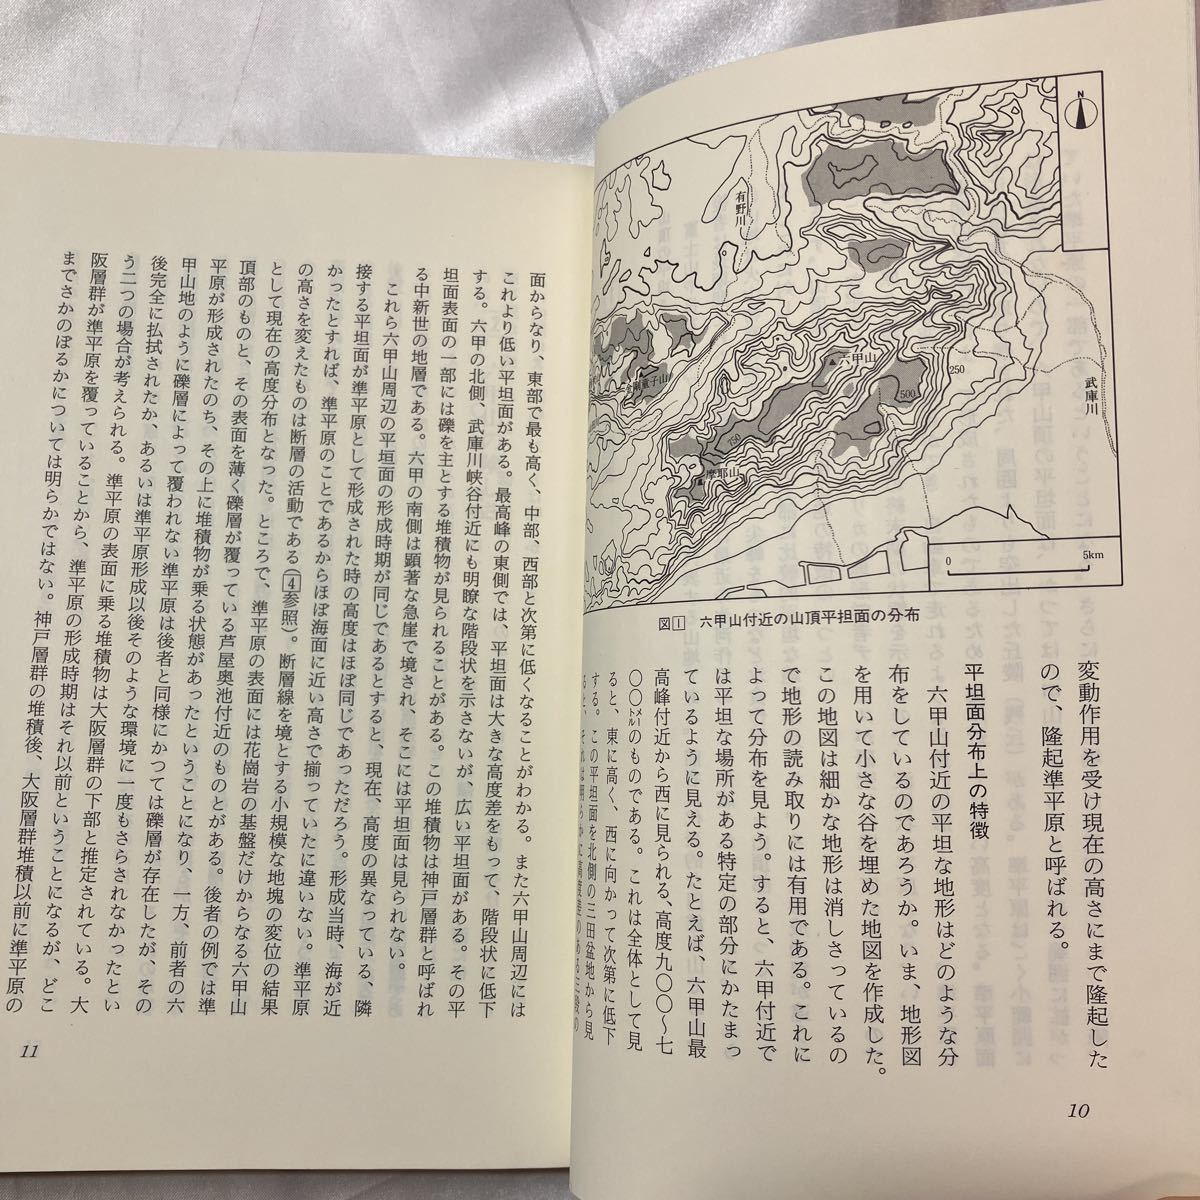 zaa-470♪六甲山の地理―その自然と暮らし 田中 真吾(著)神戸新聞総合出版センター (1988/7/1)